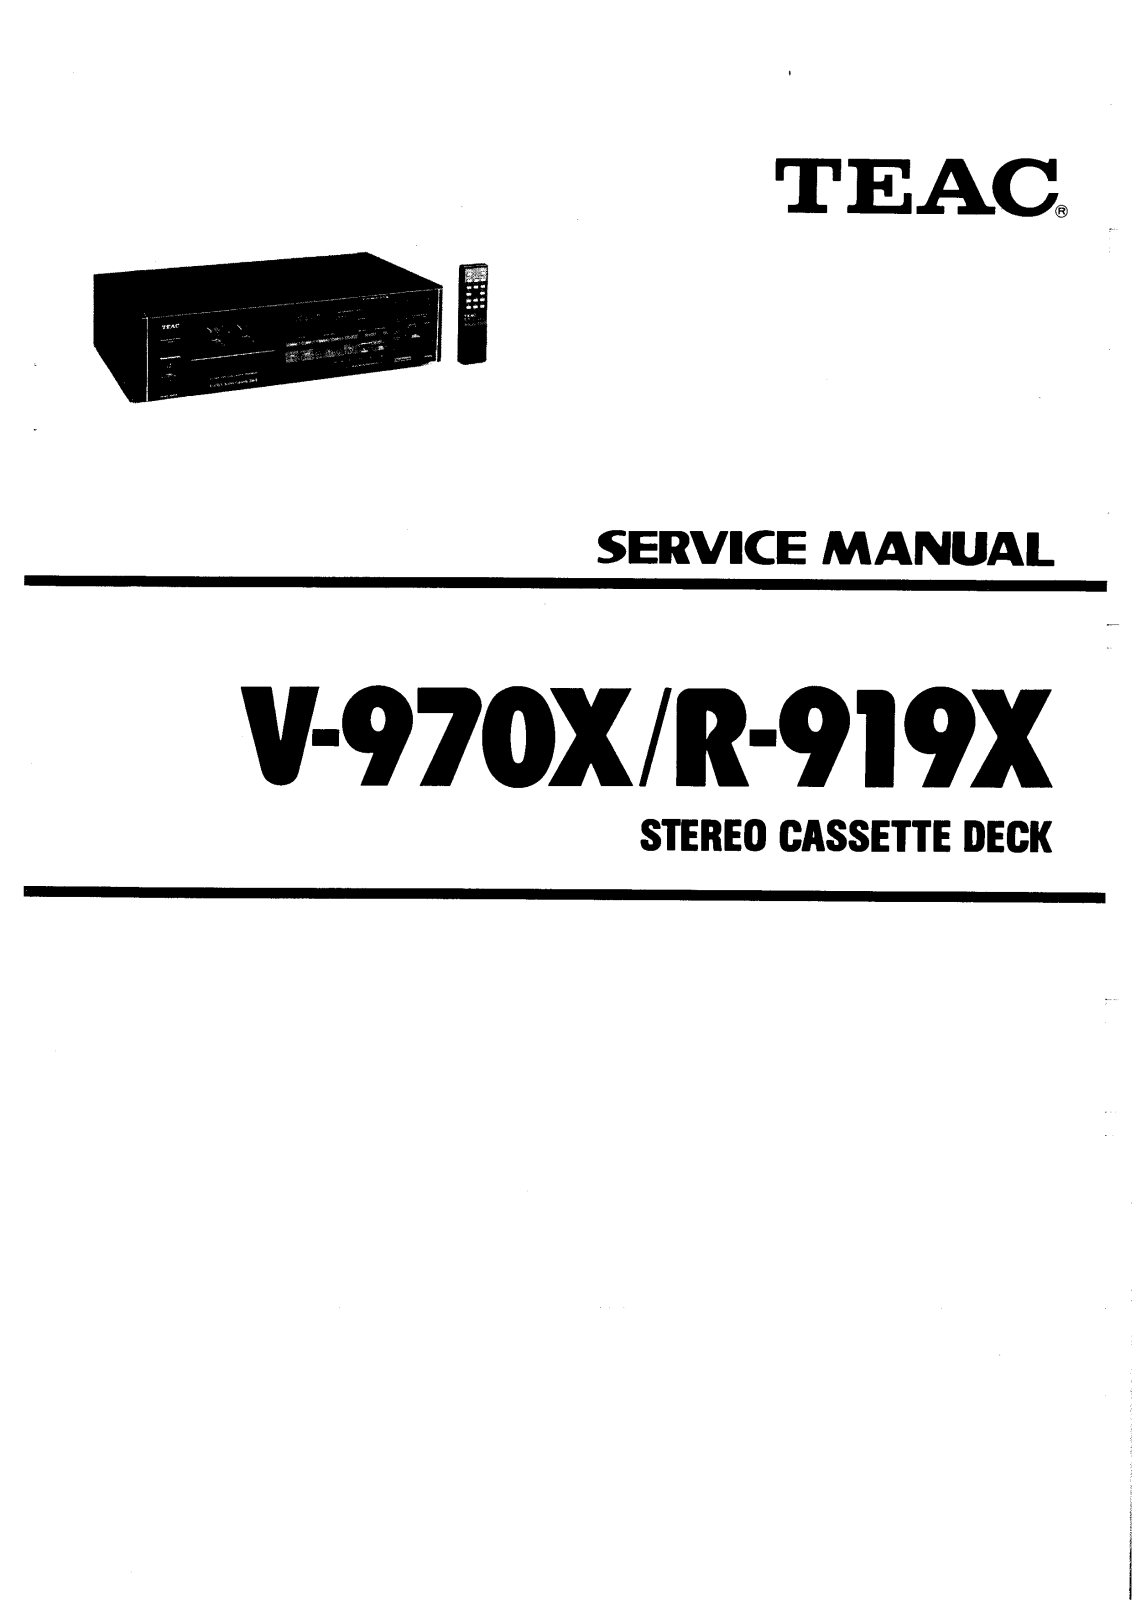 TEAC V-970X, R-919X Schematic